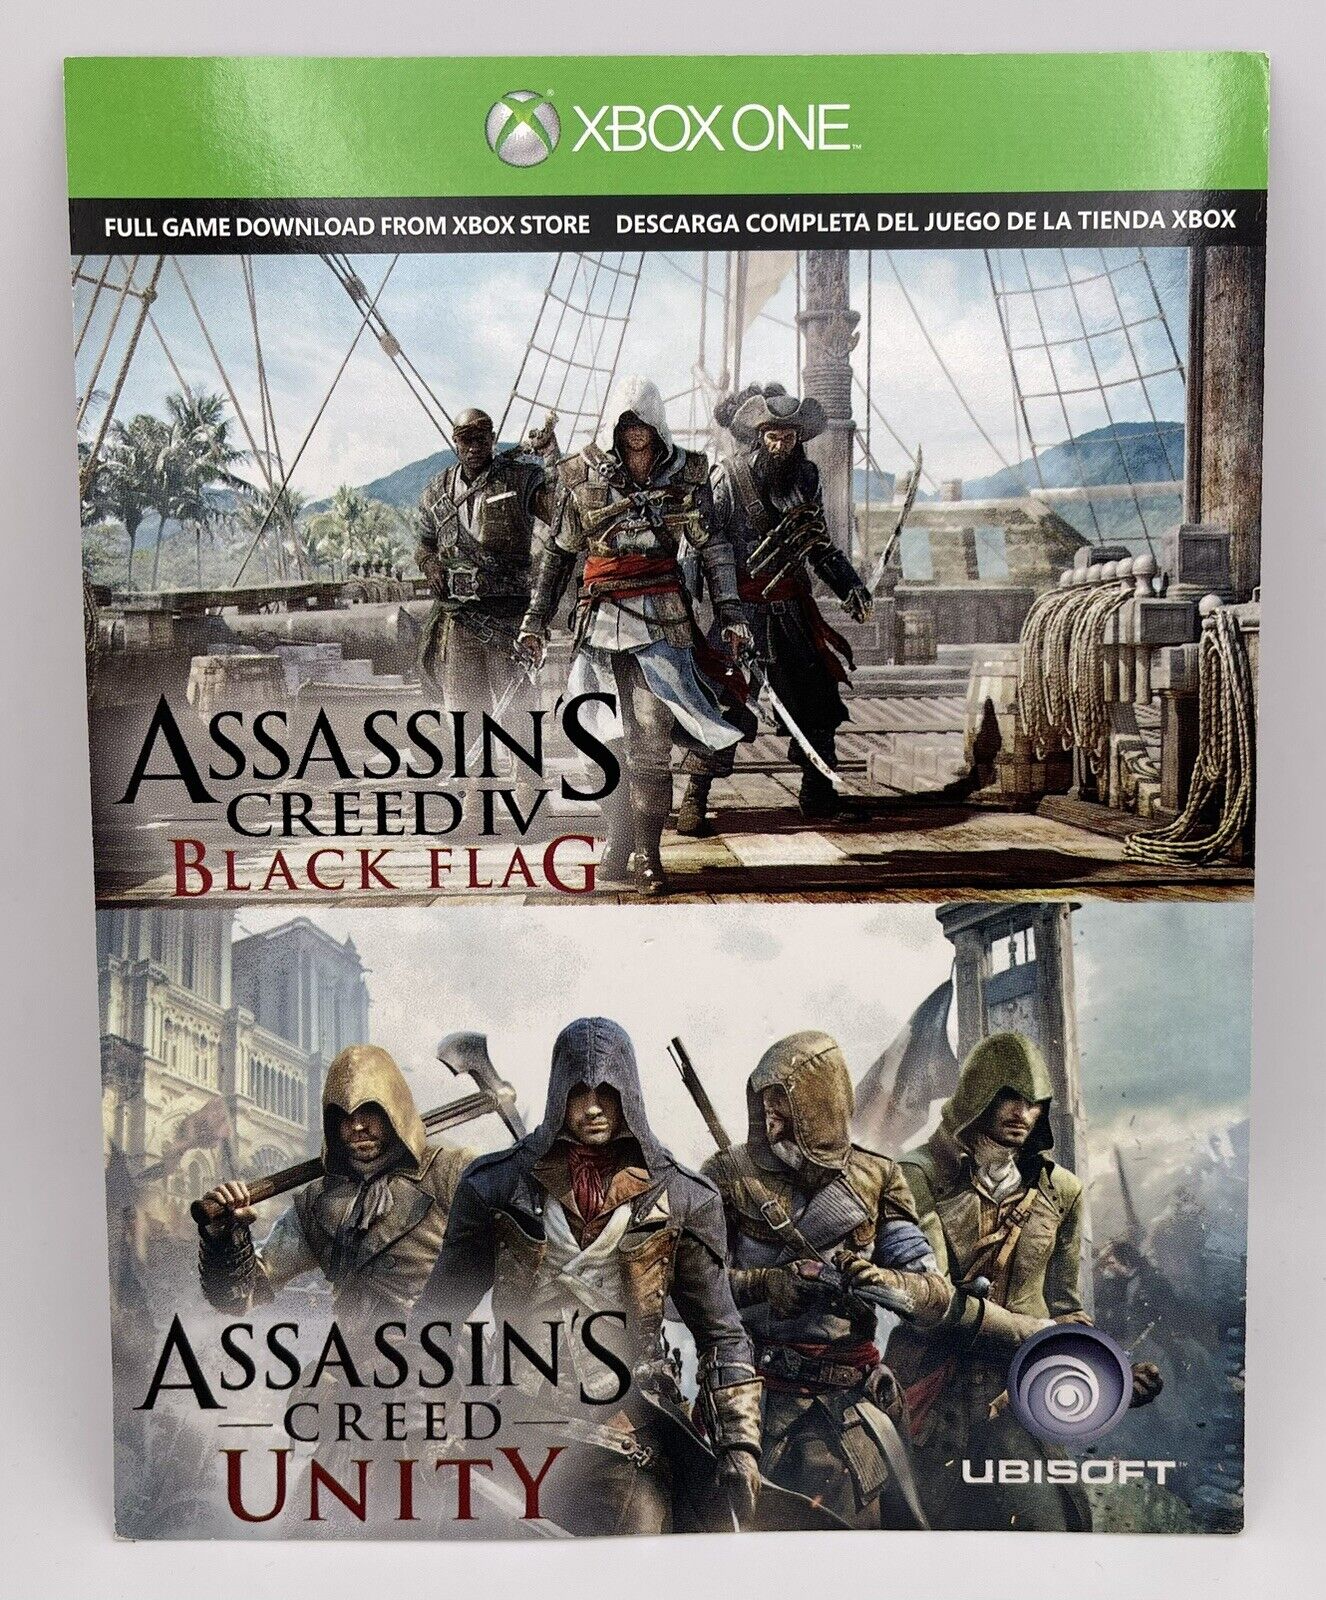 Consola Xbox One de 500 GB Paquete Assassin's Creed Unity/Black Flag (Xbox One) 